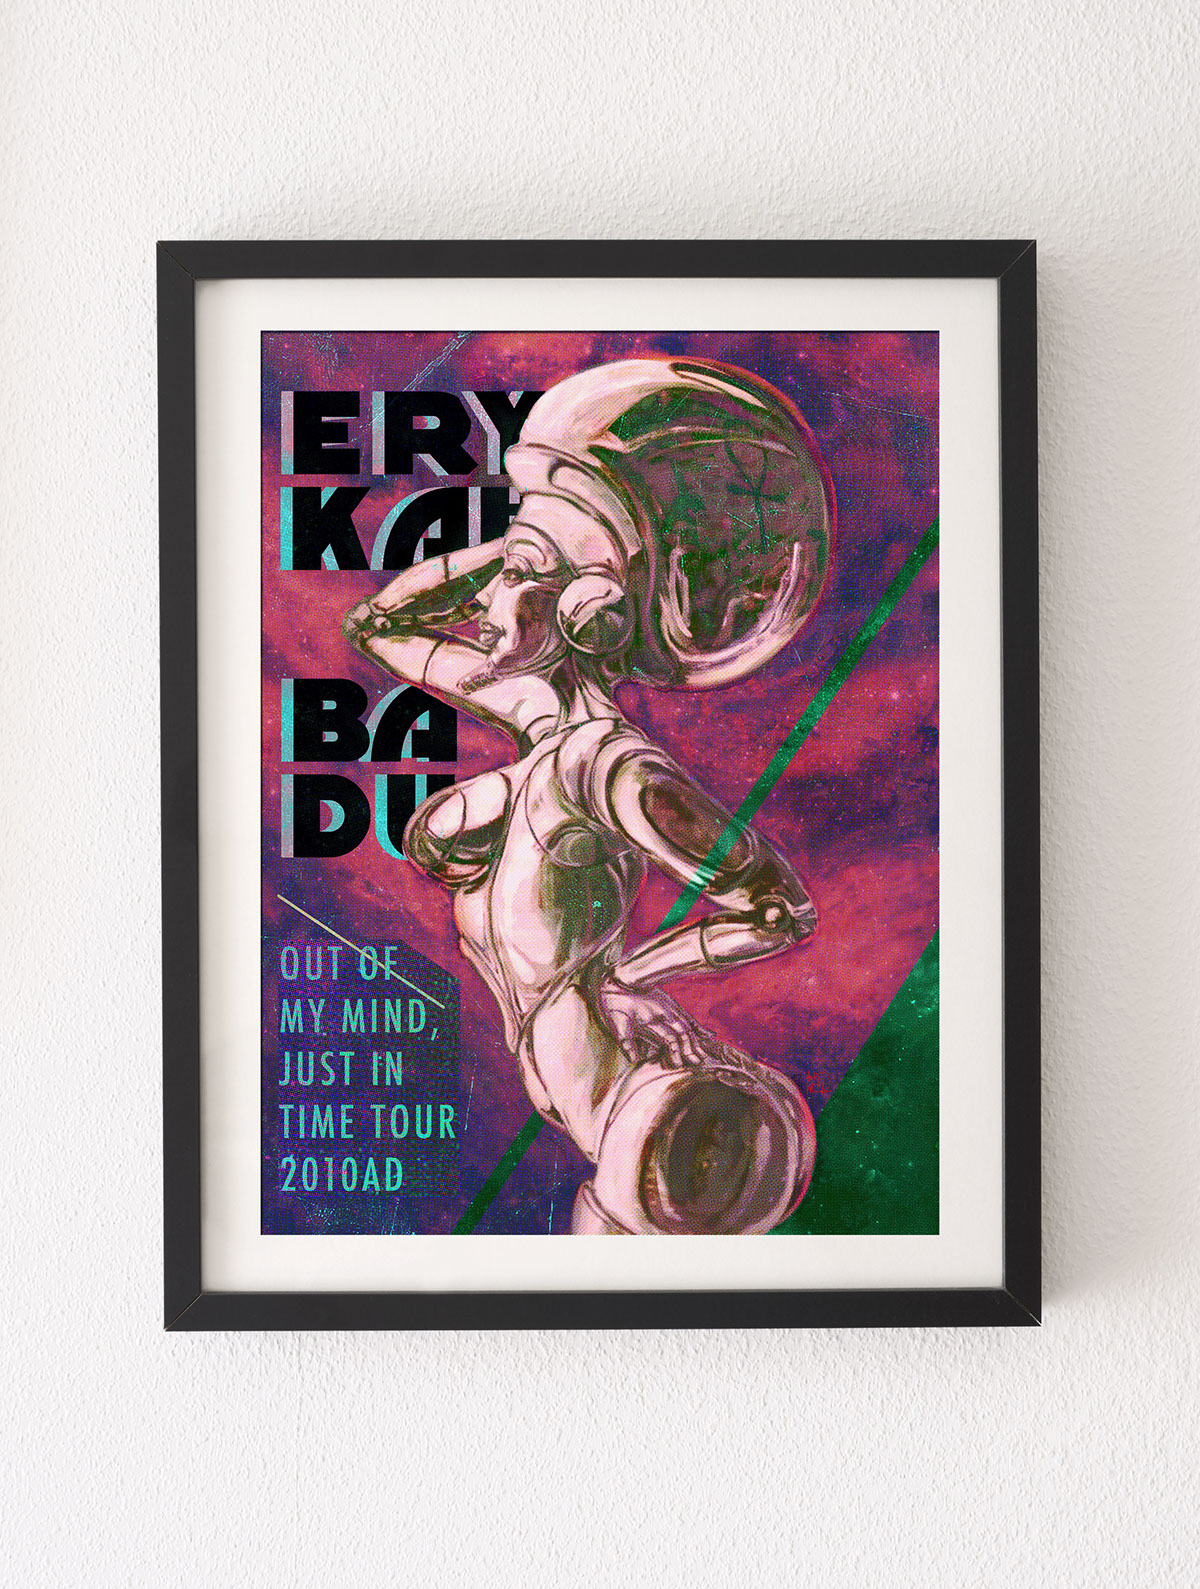 erykah badu concert tour poster merchandise venue R&B soul jazz robot Space  chrome galaxy stars